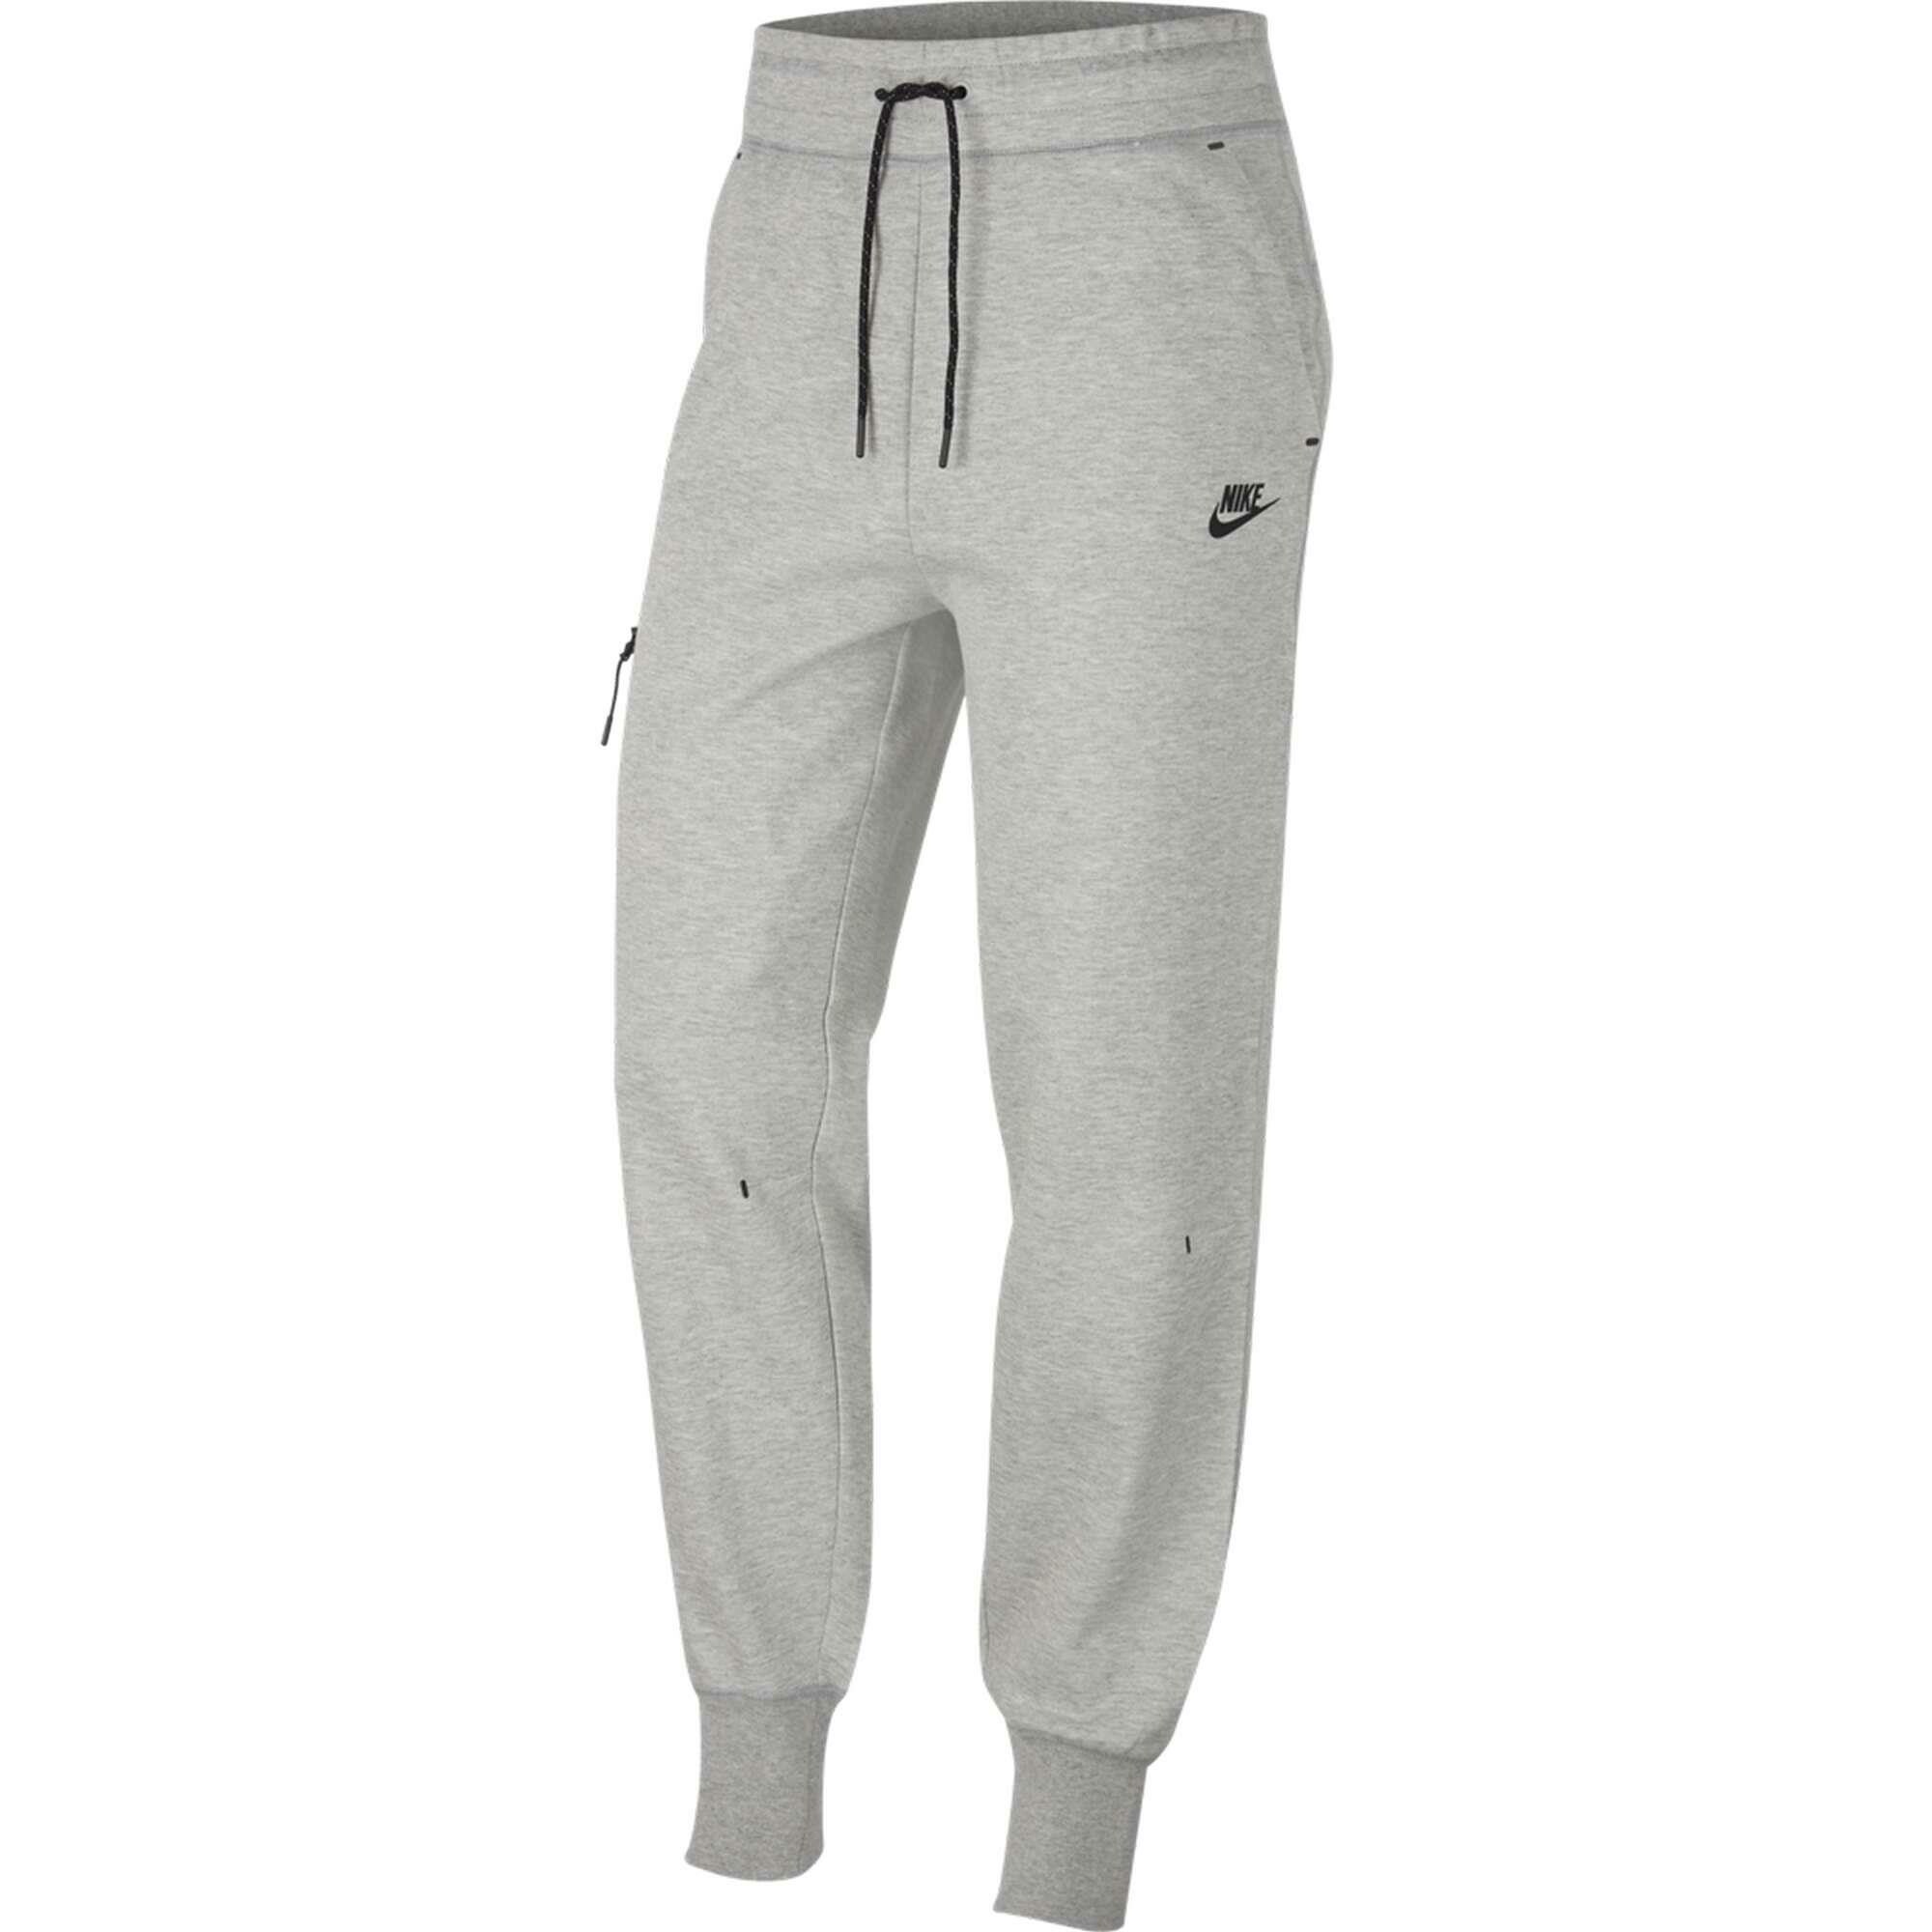 Herkenning Boekwinkel Geschiktheid Nike Sportswear Tech Fleece joggingbroek dames dark grey heather zwart